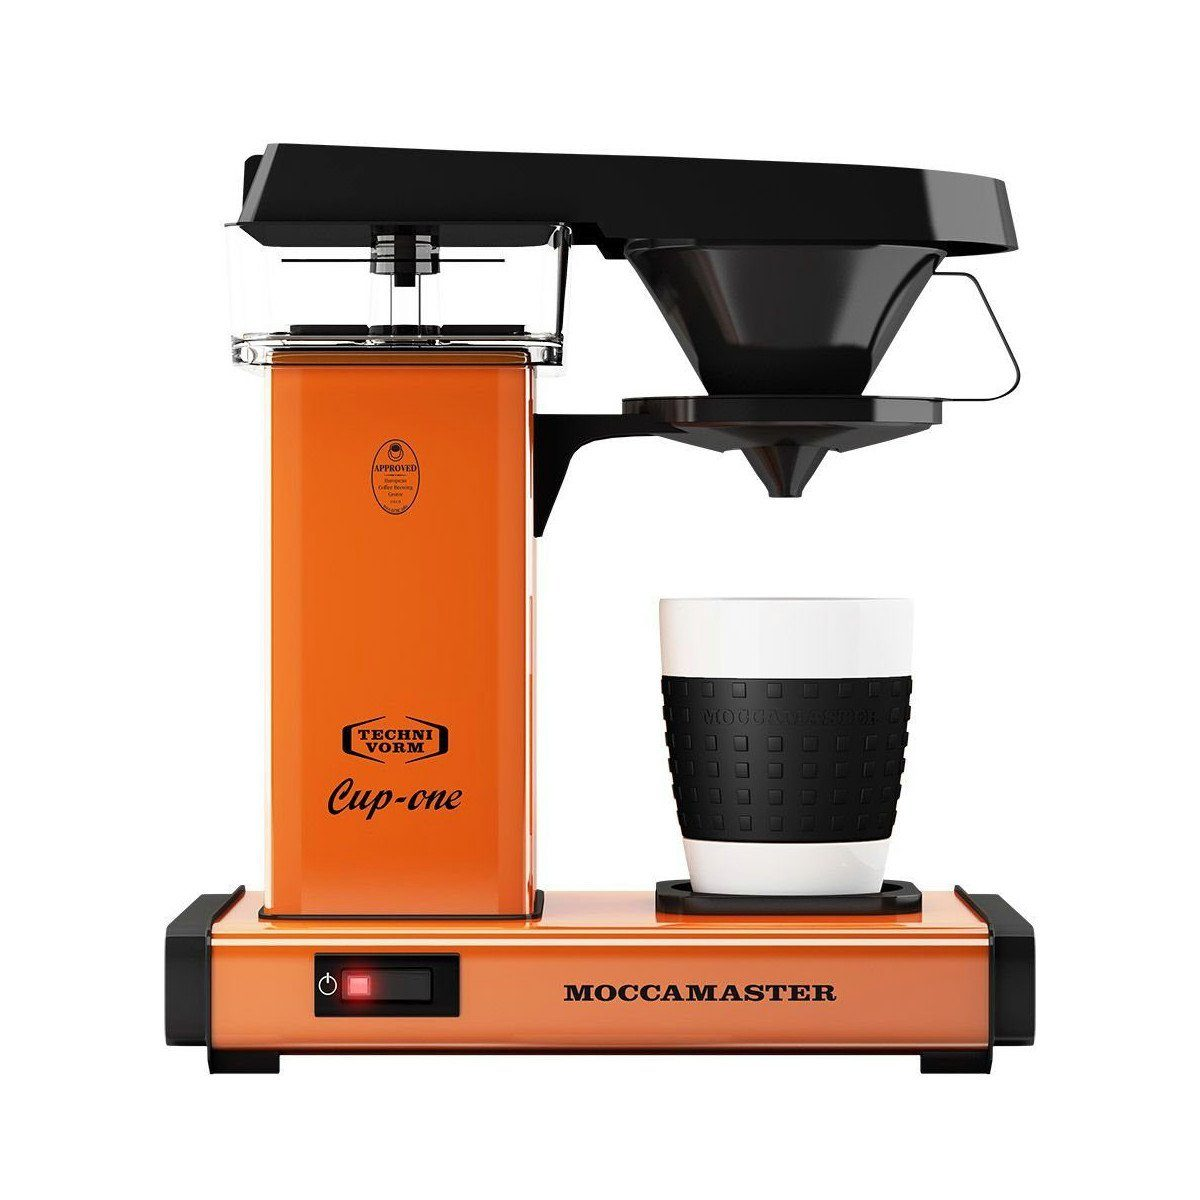 MOCCAMASTER Cup-one Kaffeemaschine Orange